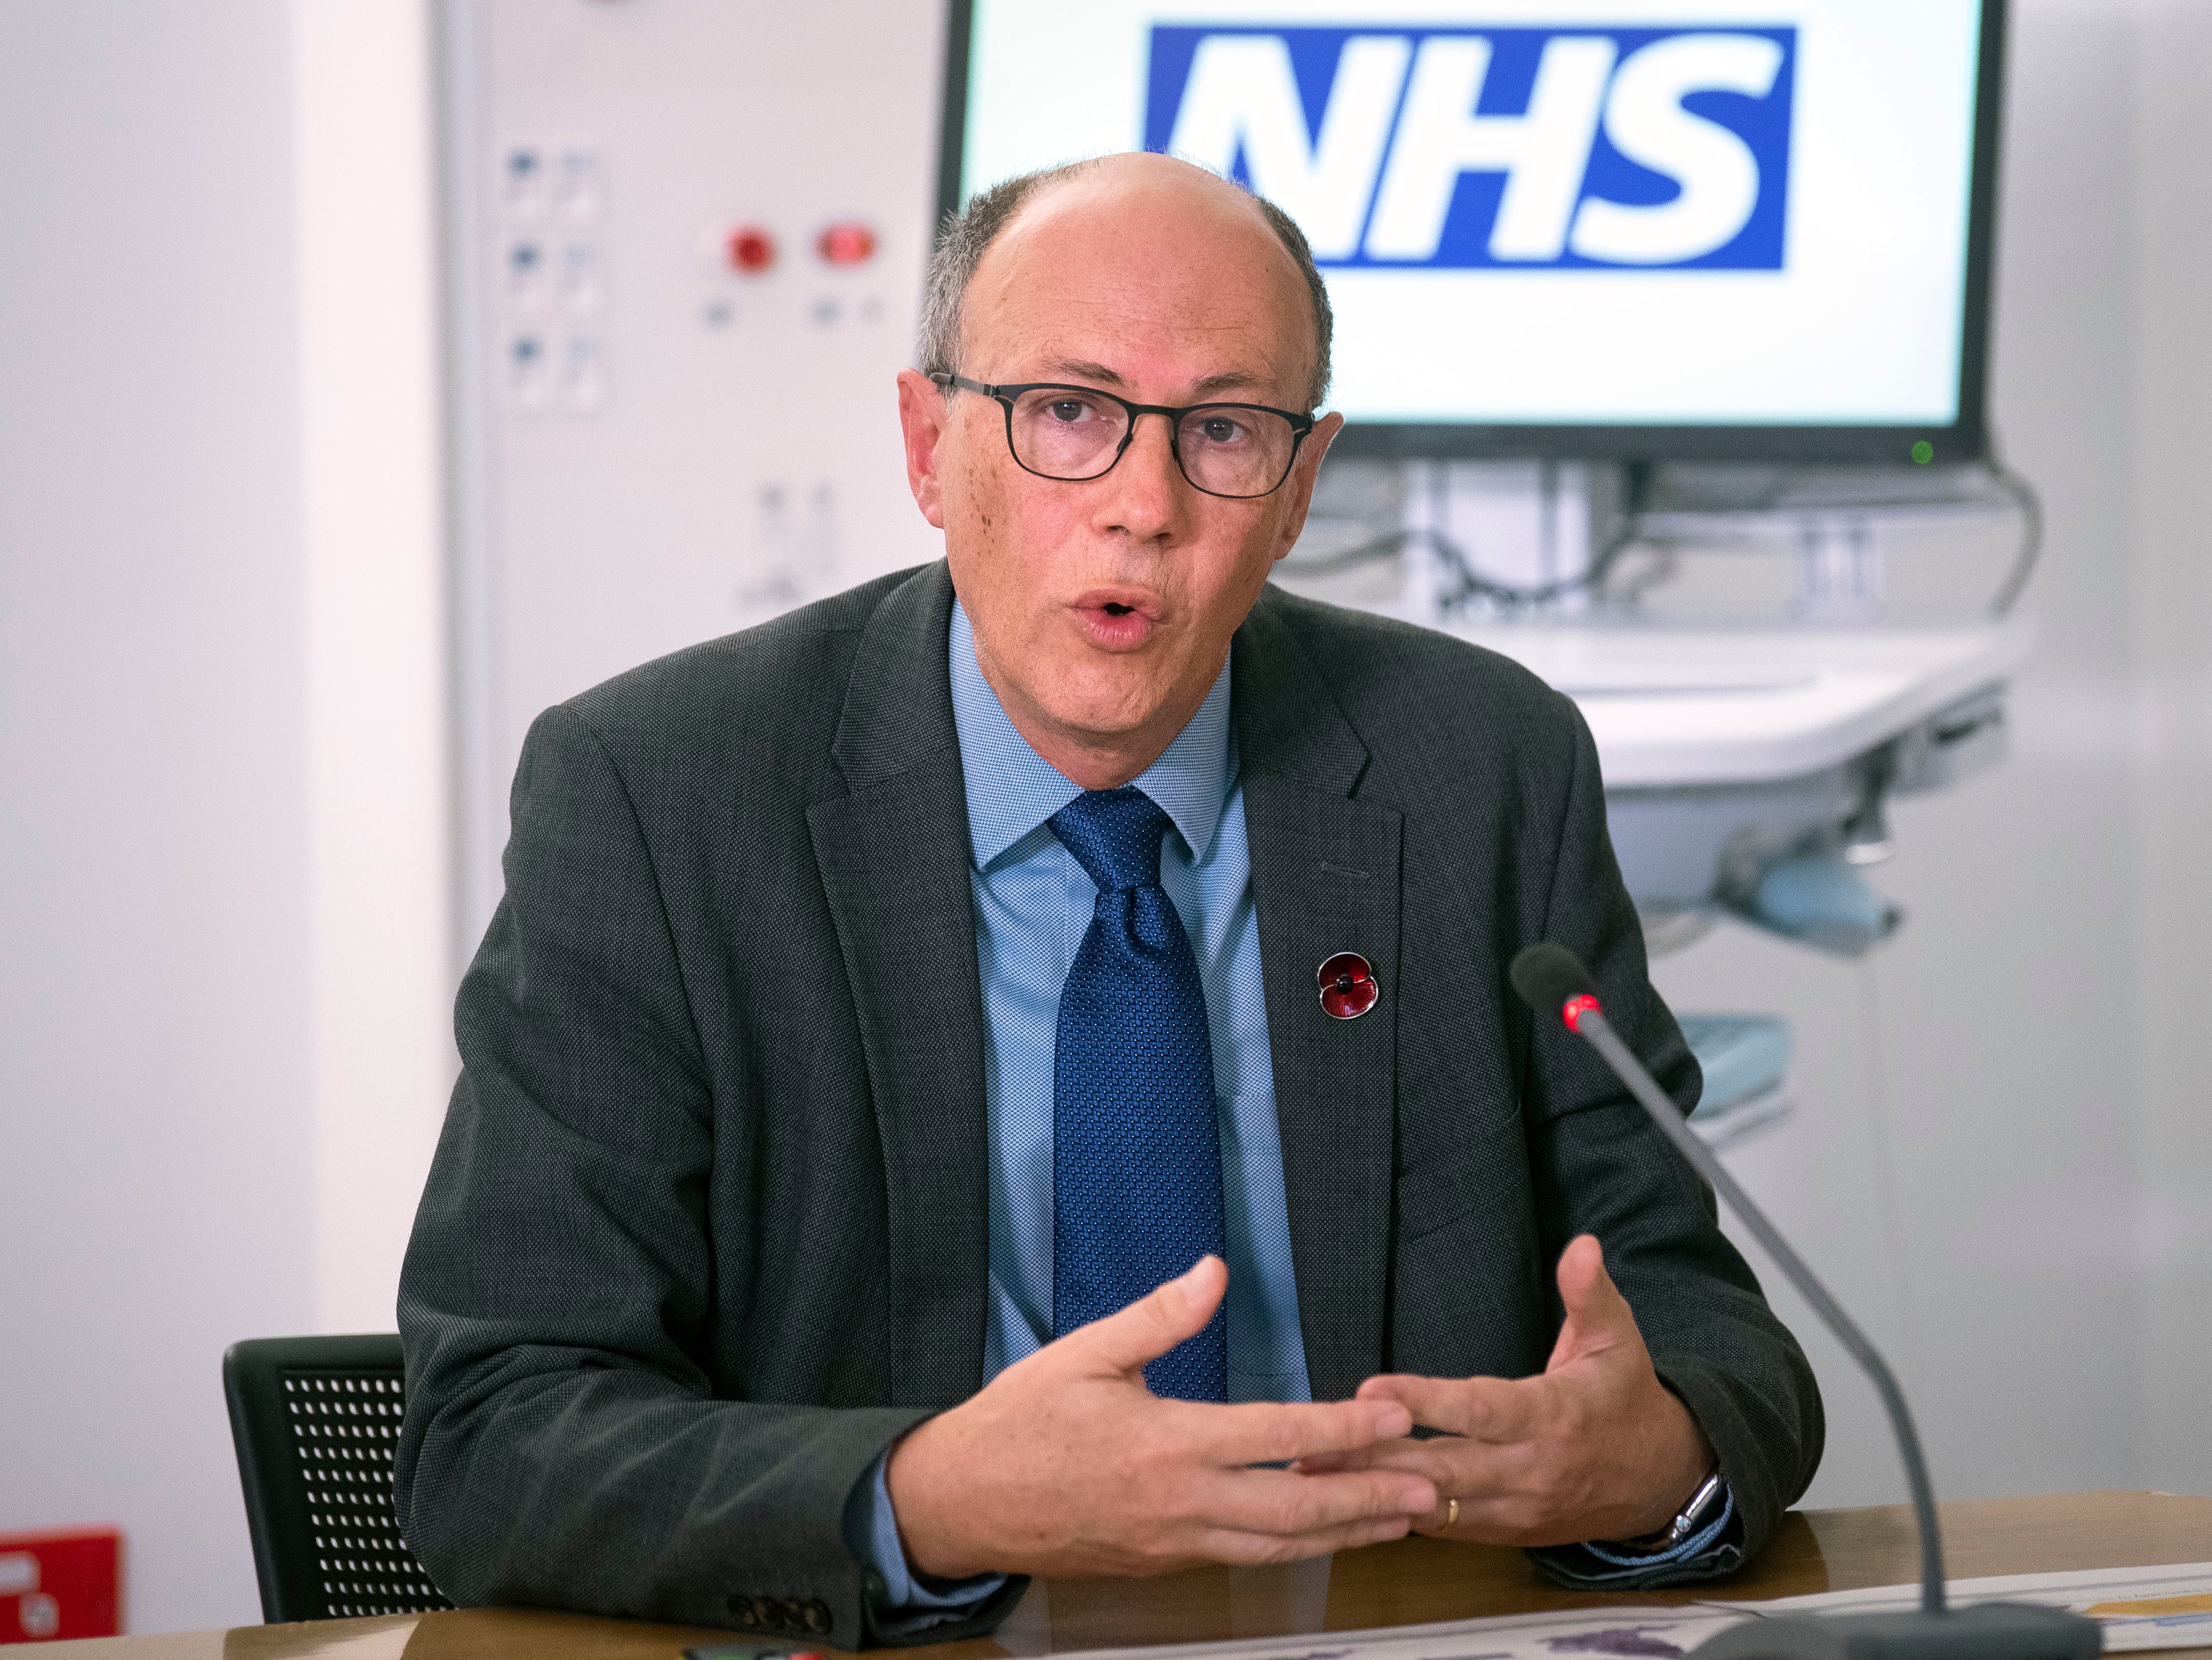 Stephen Powis, NHS England’s national medical director